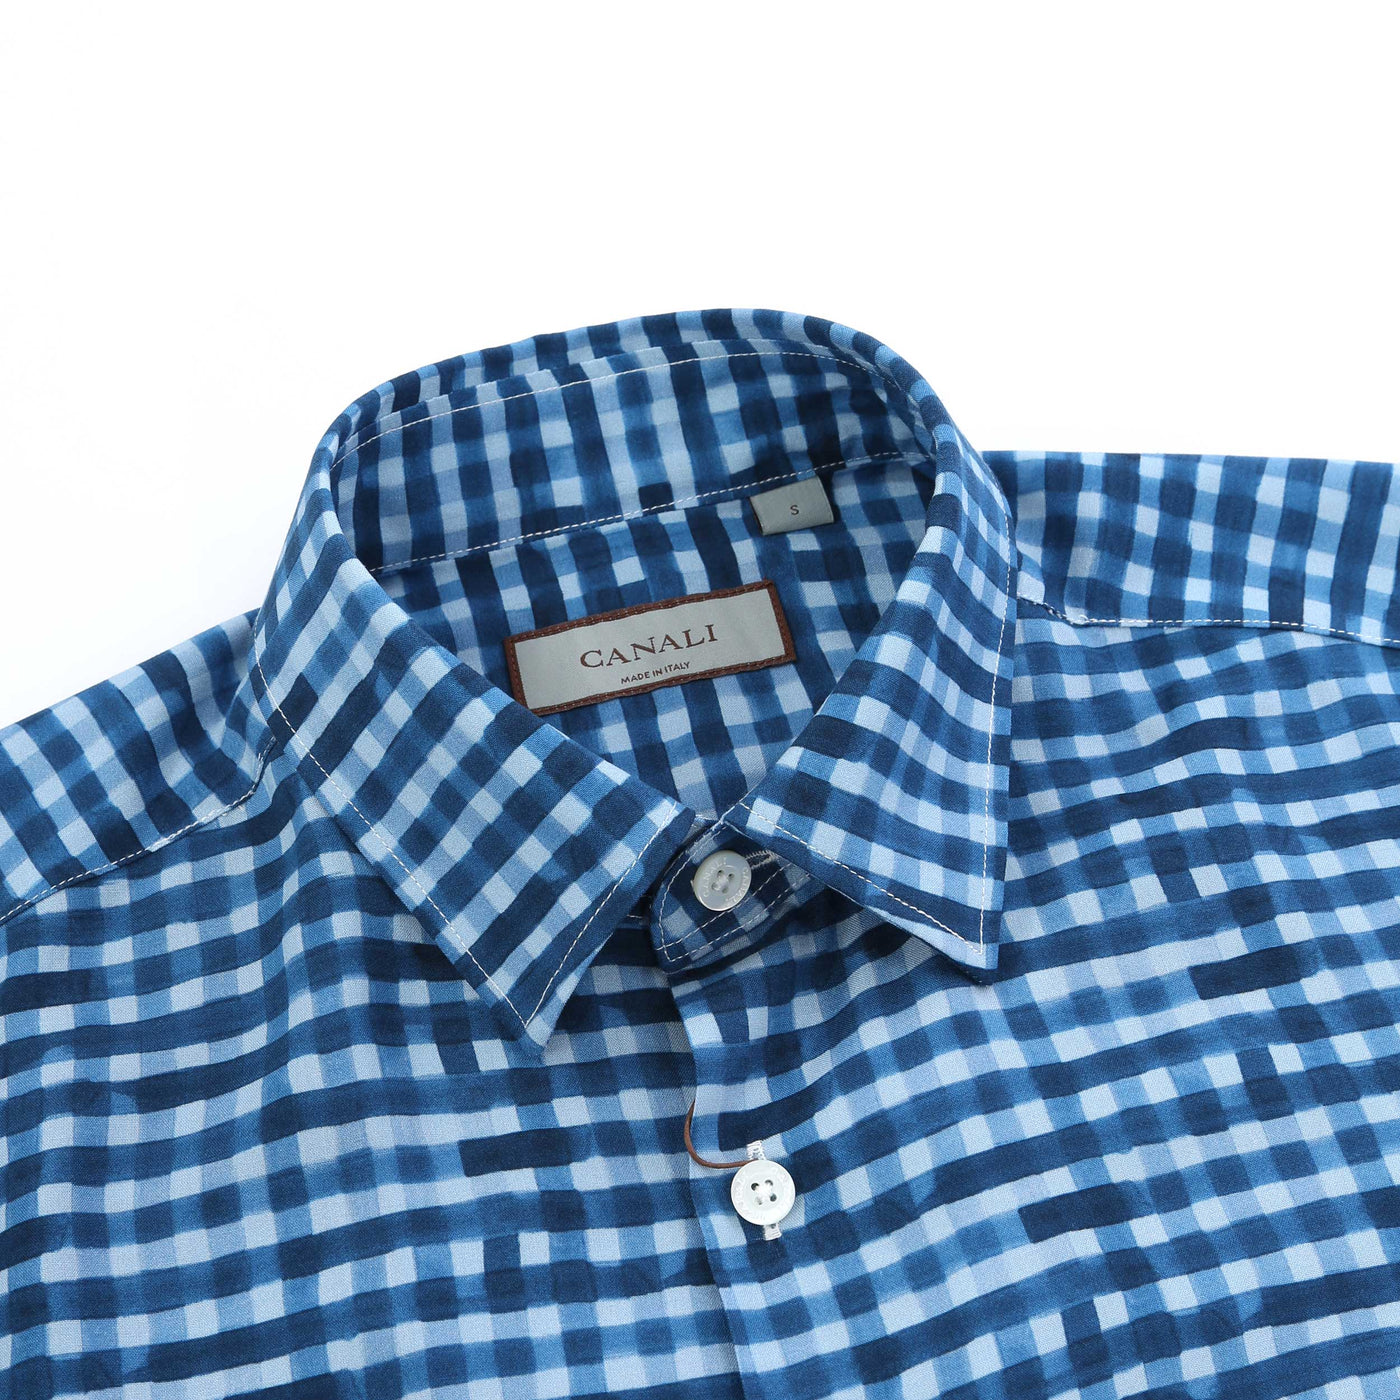 Canali Small Check Print SS Shirt in Blue Print Collar